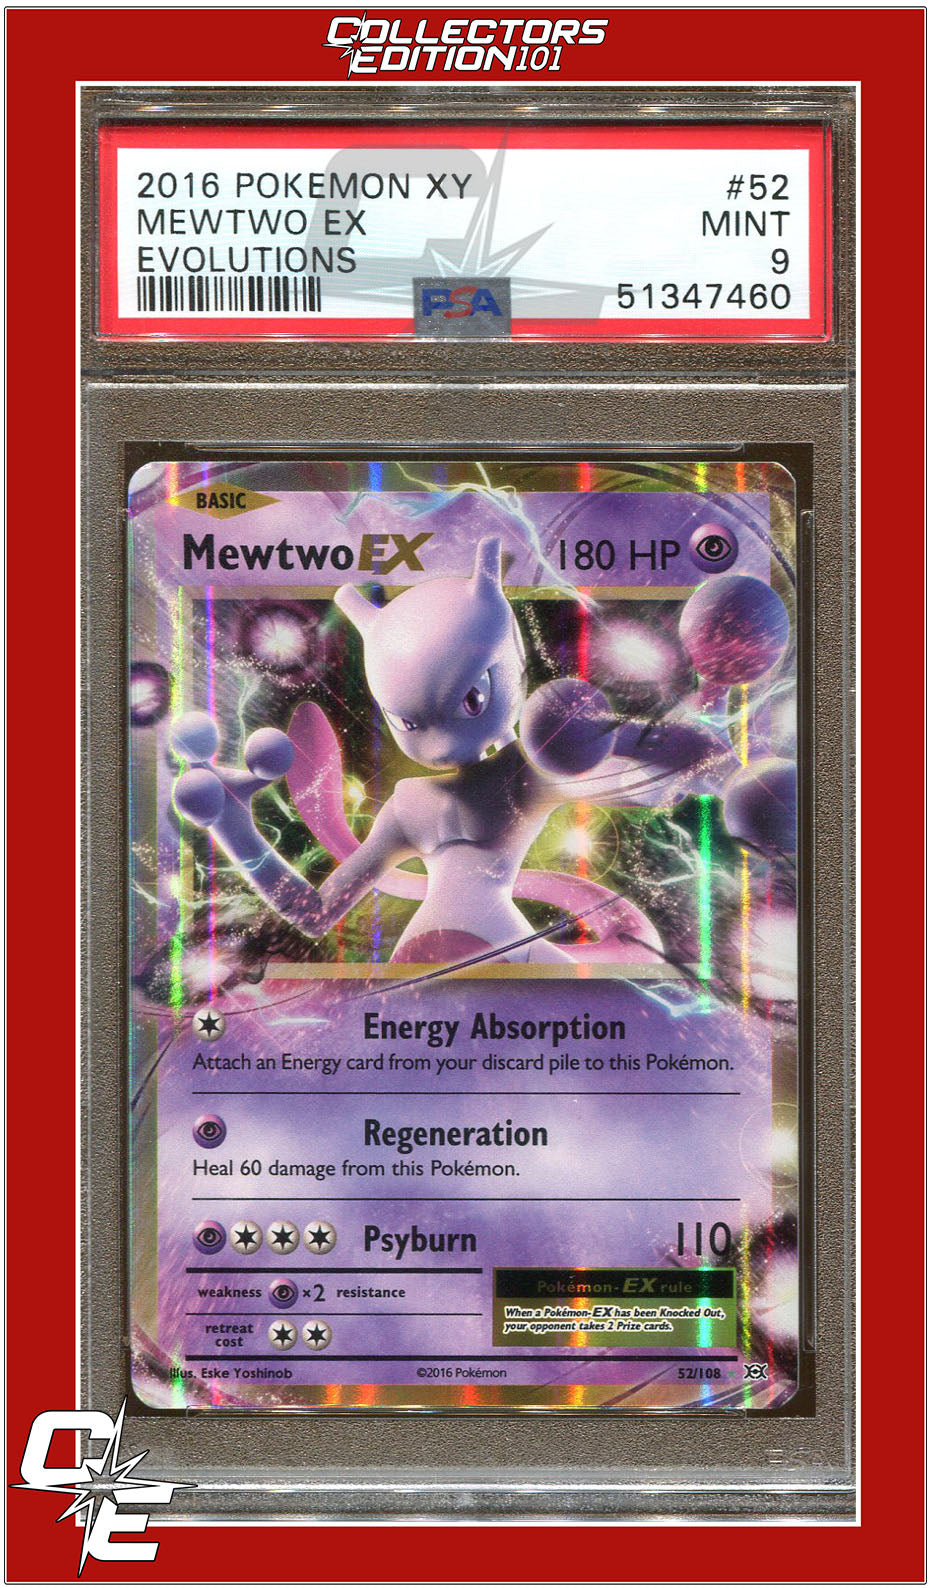 Mewtwo-EX, Evolutions